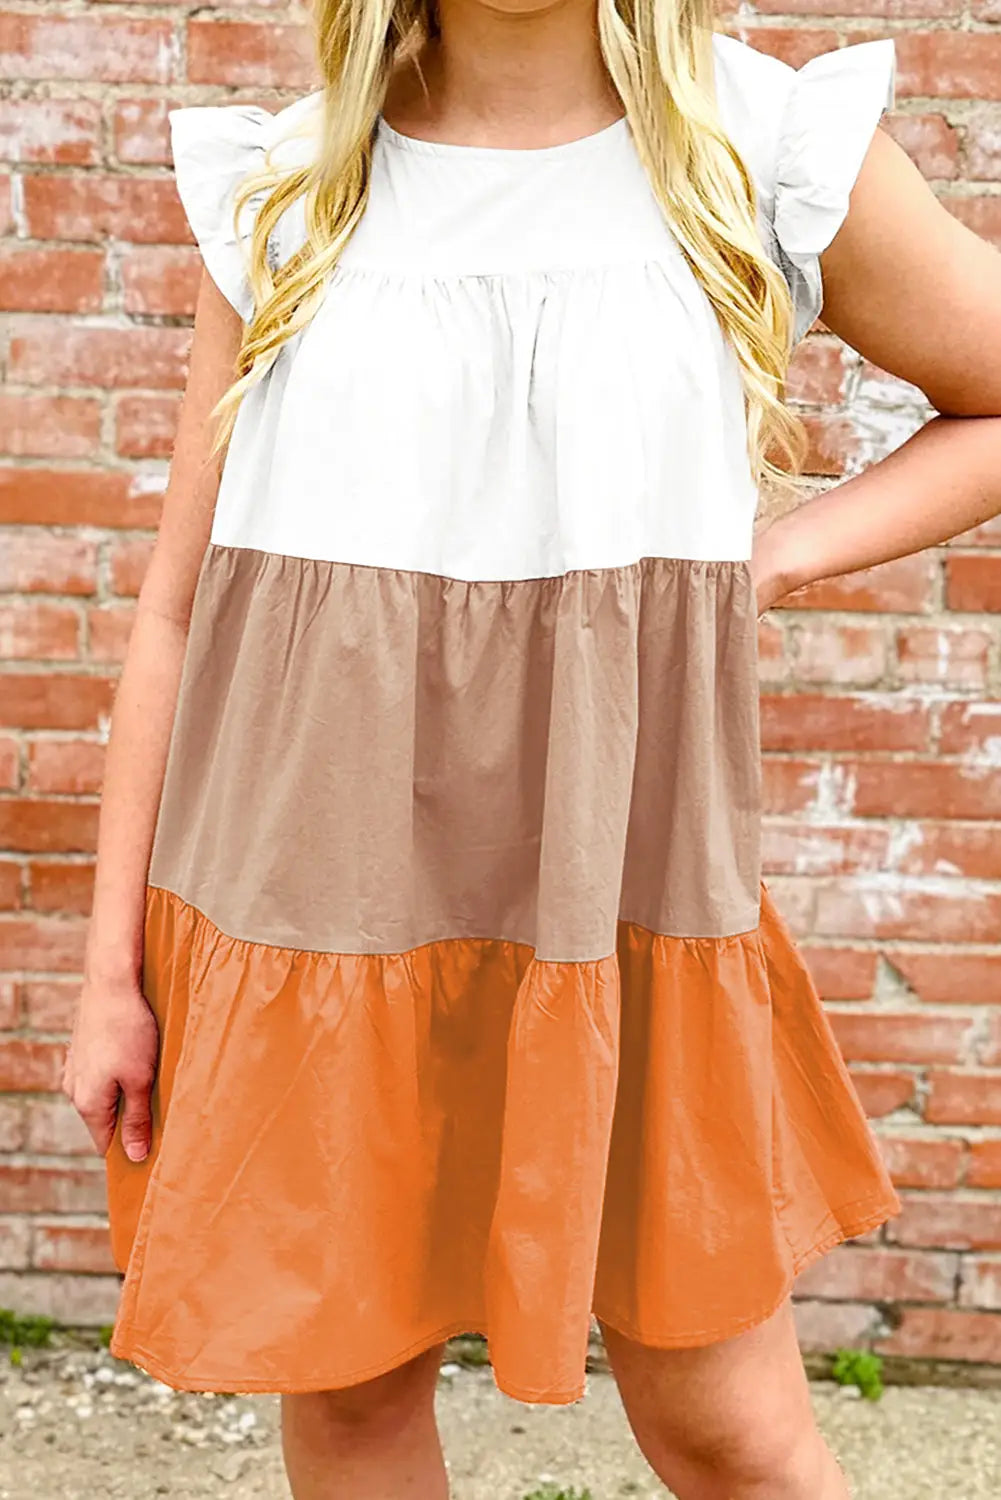 Apricot tiered mini dress - s / 100% cotton - dresses